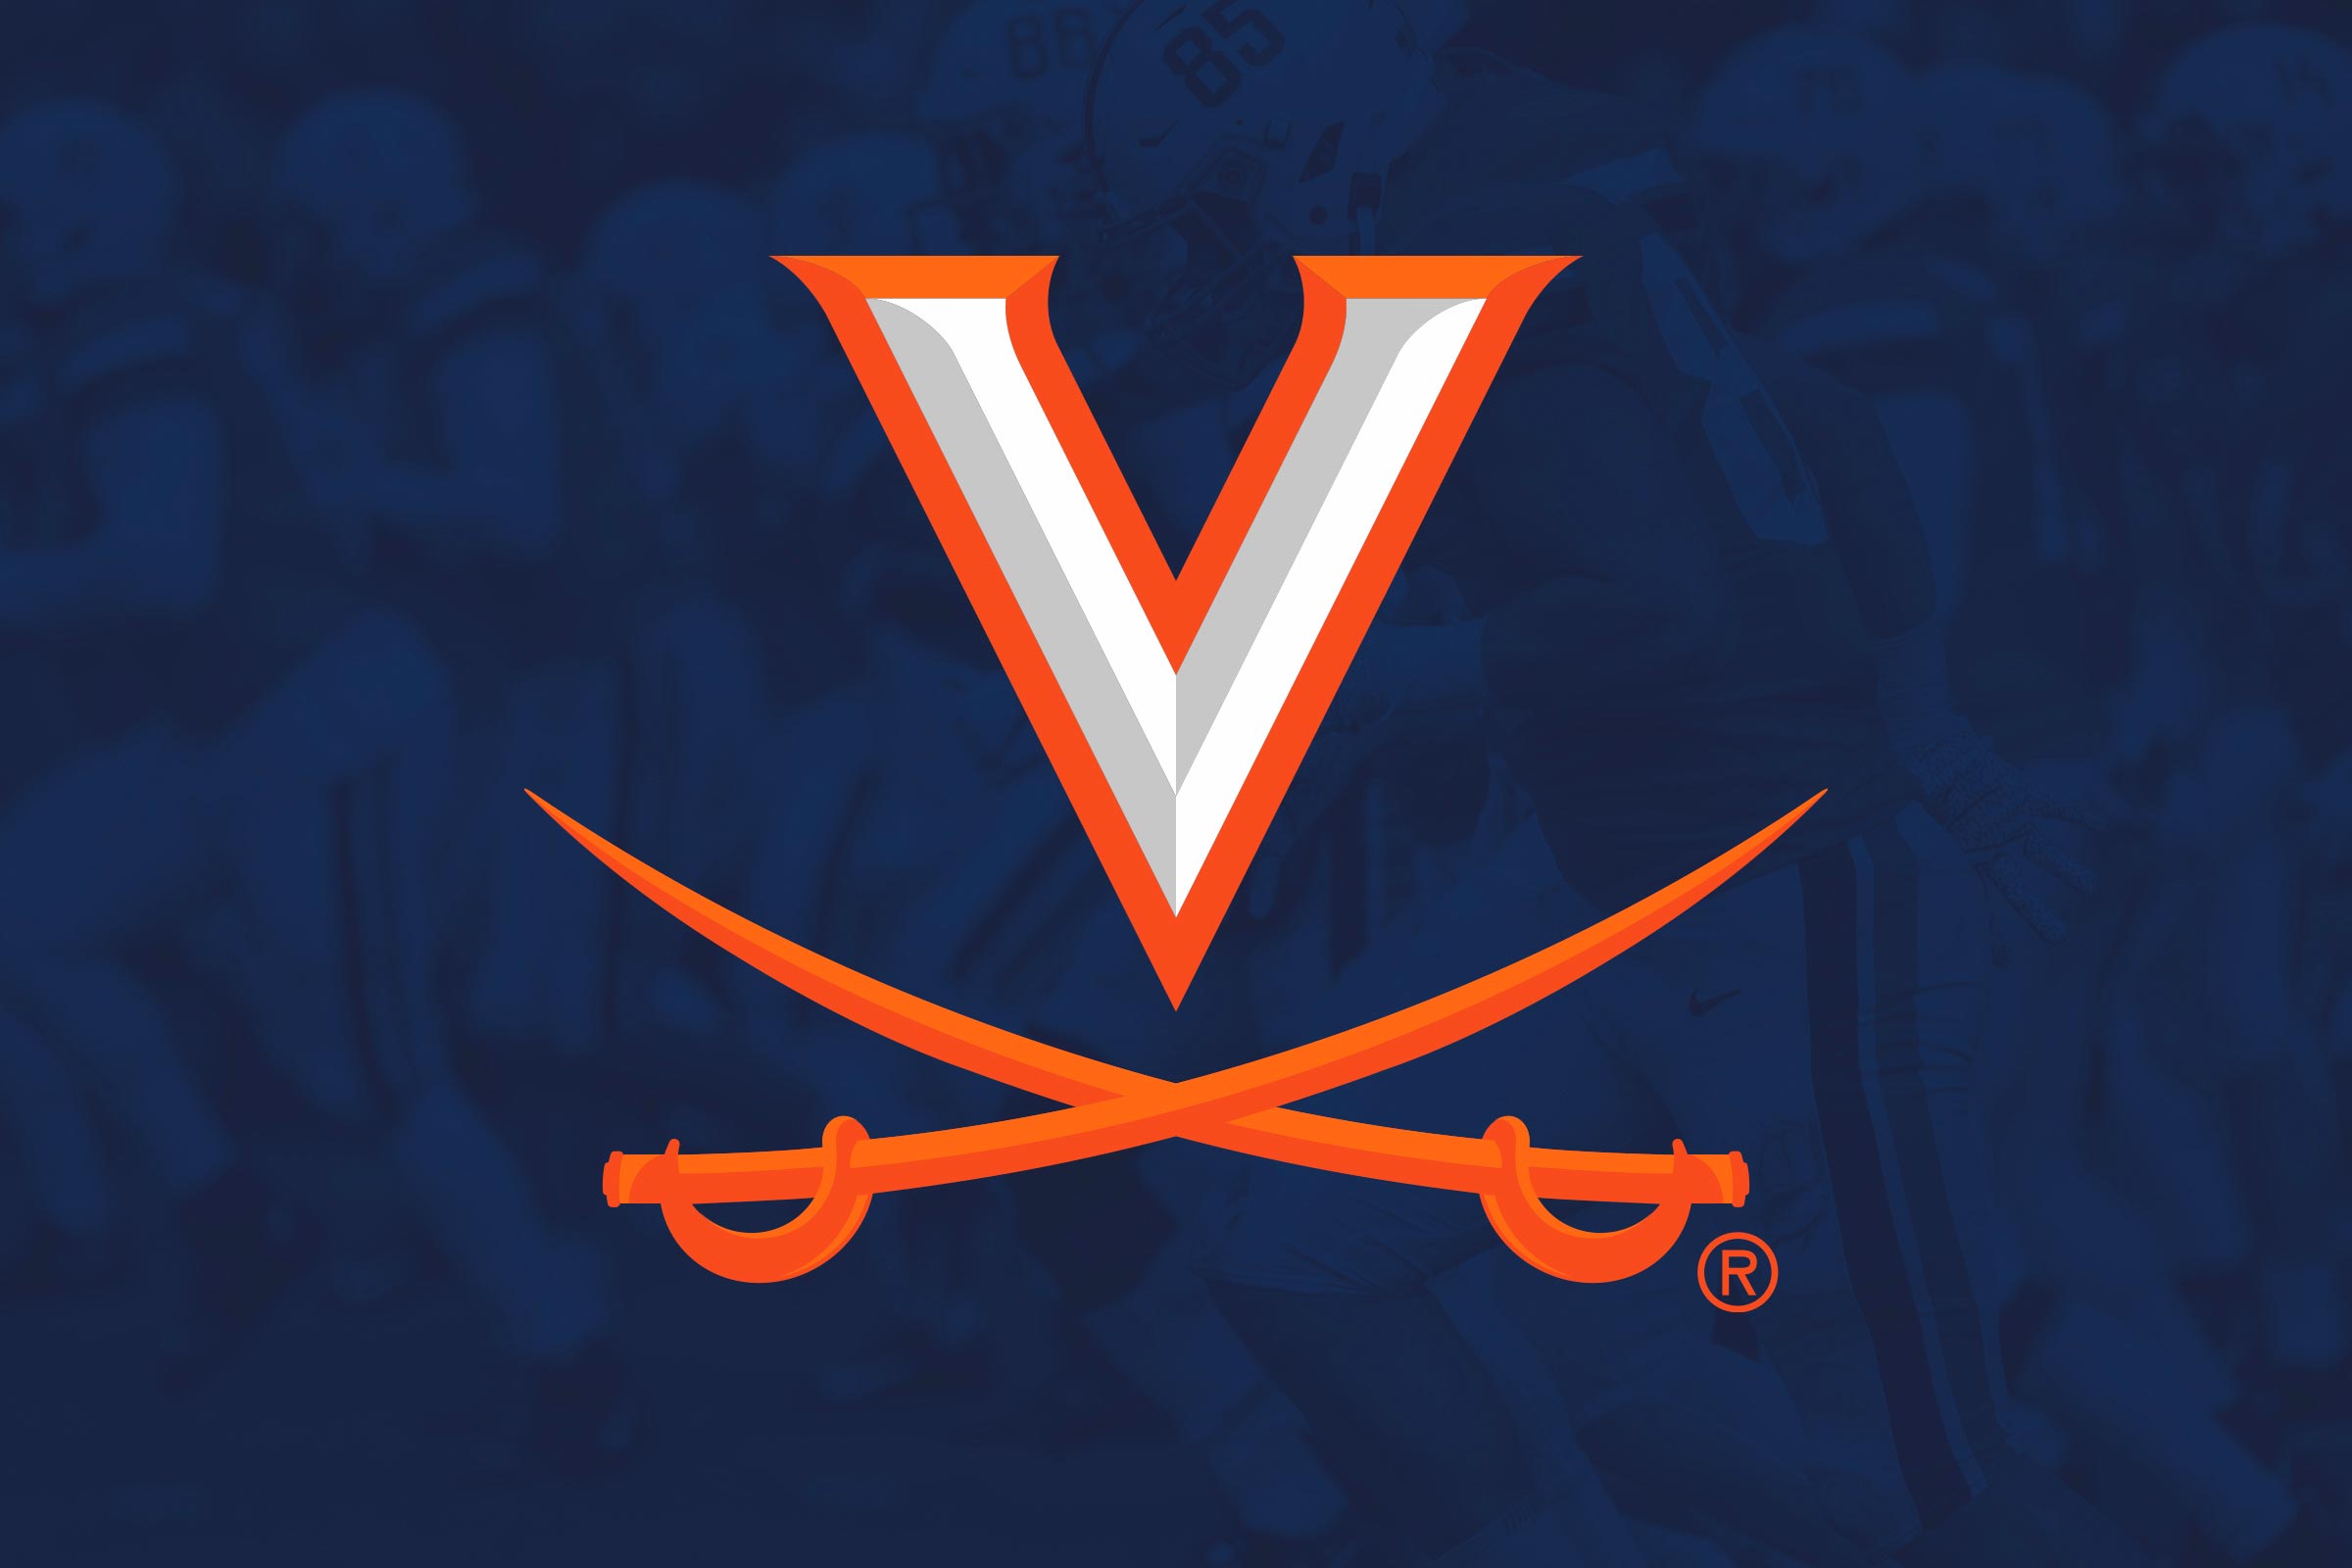 The Virginia V-Sabre logo